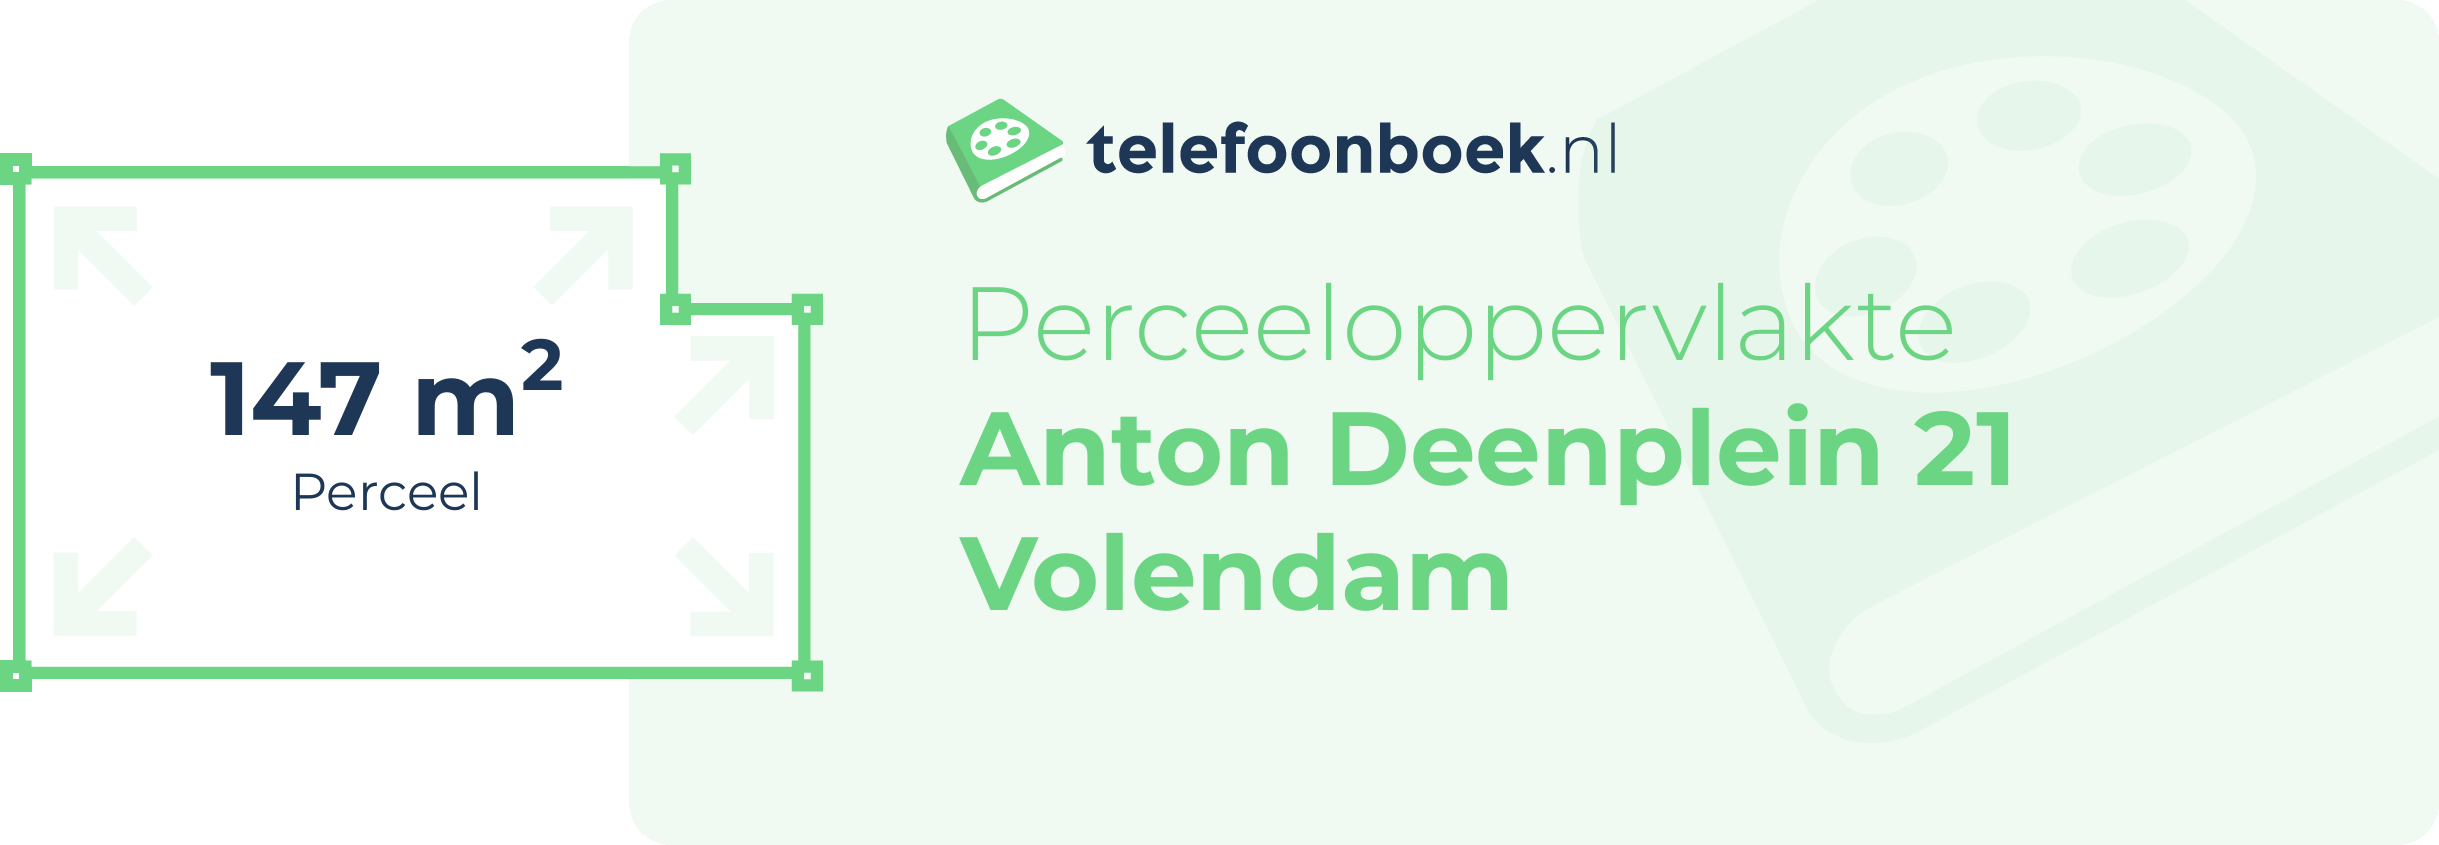 Perceeloppervlakte Anton Deenplein 21 Volendam